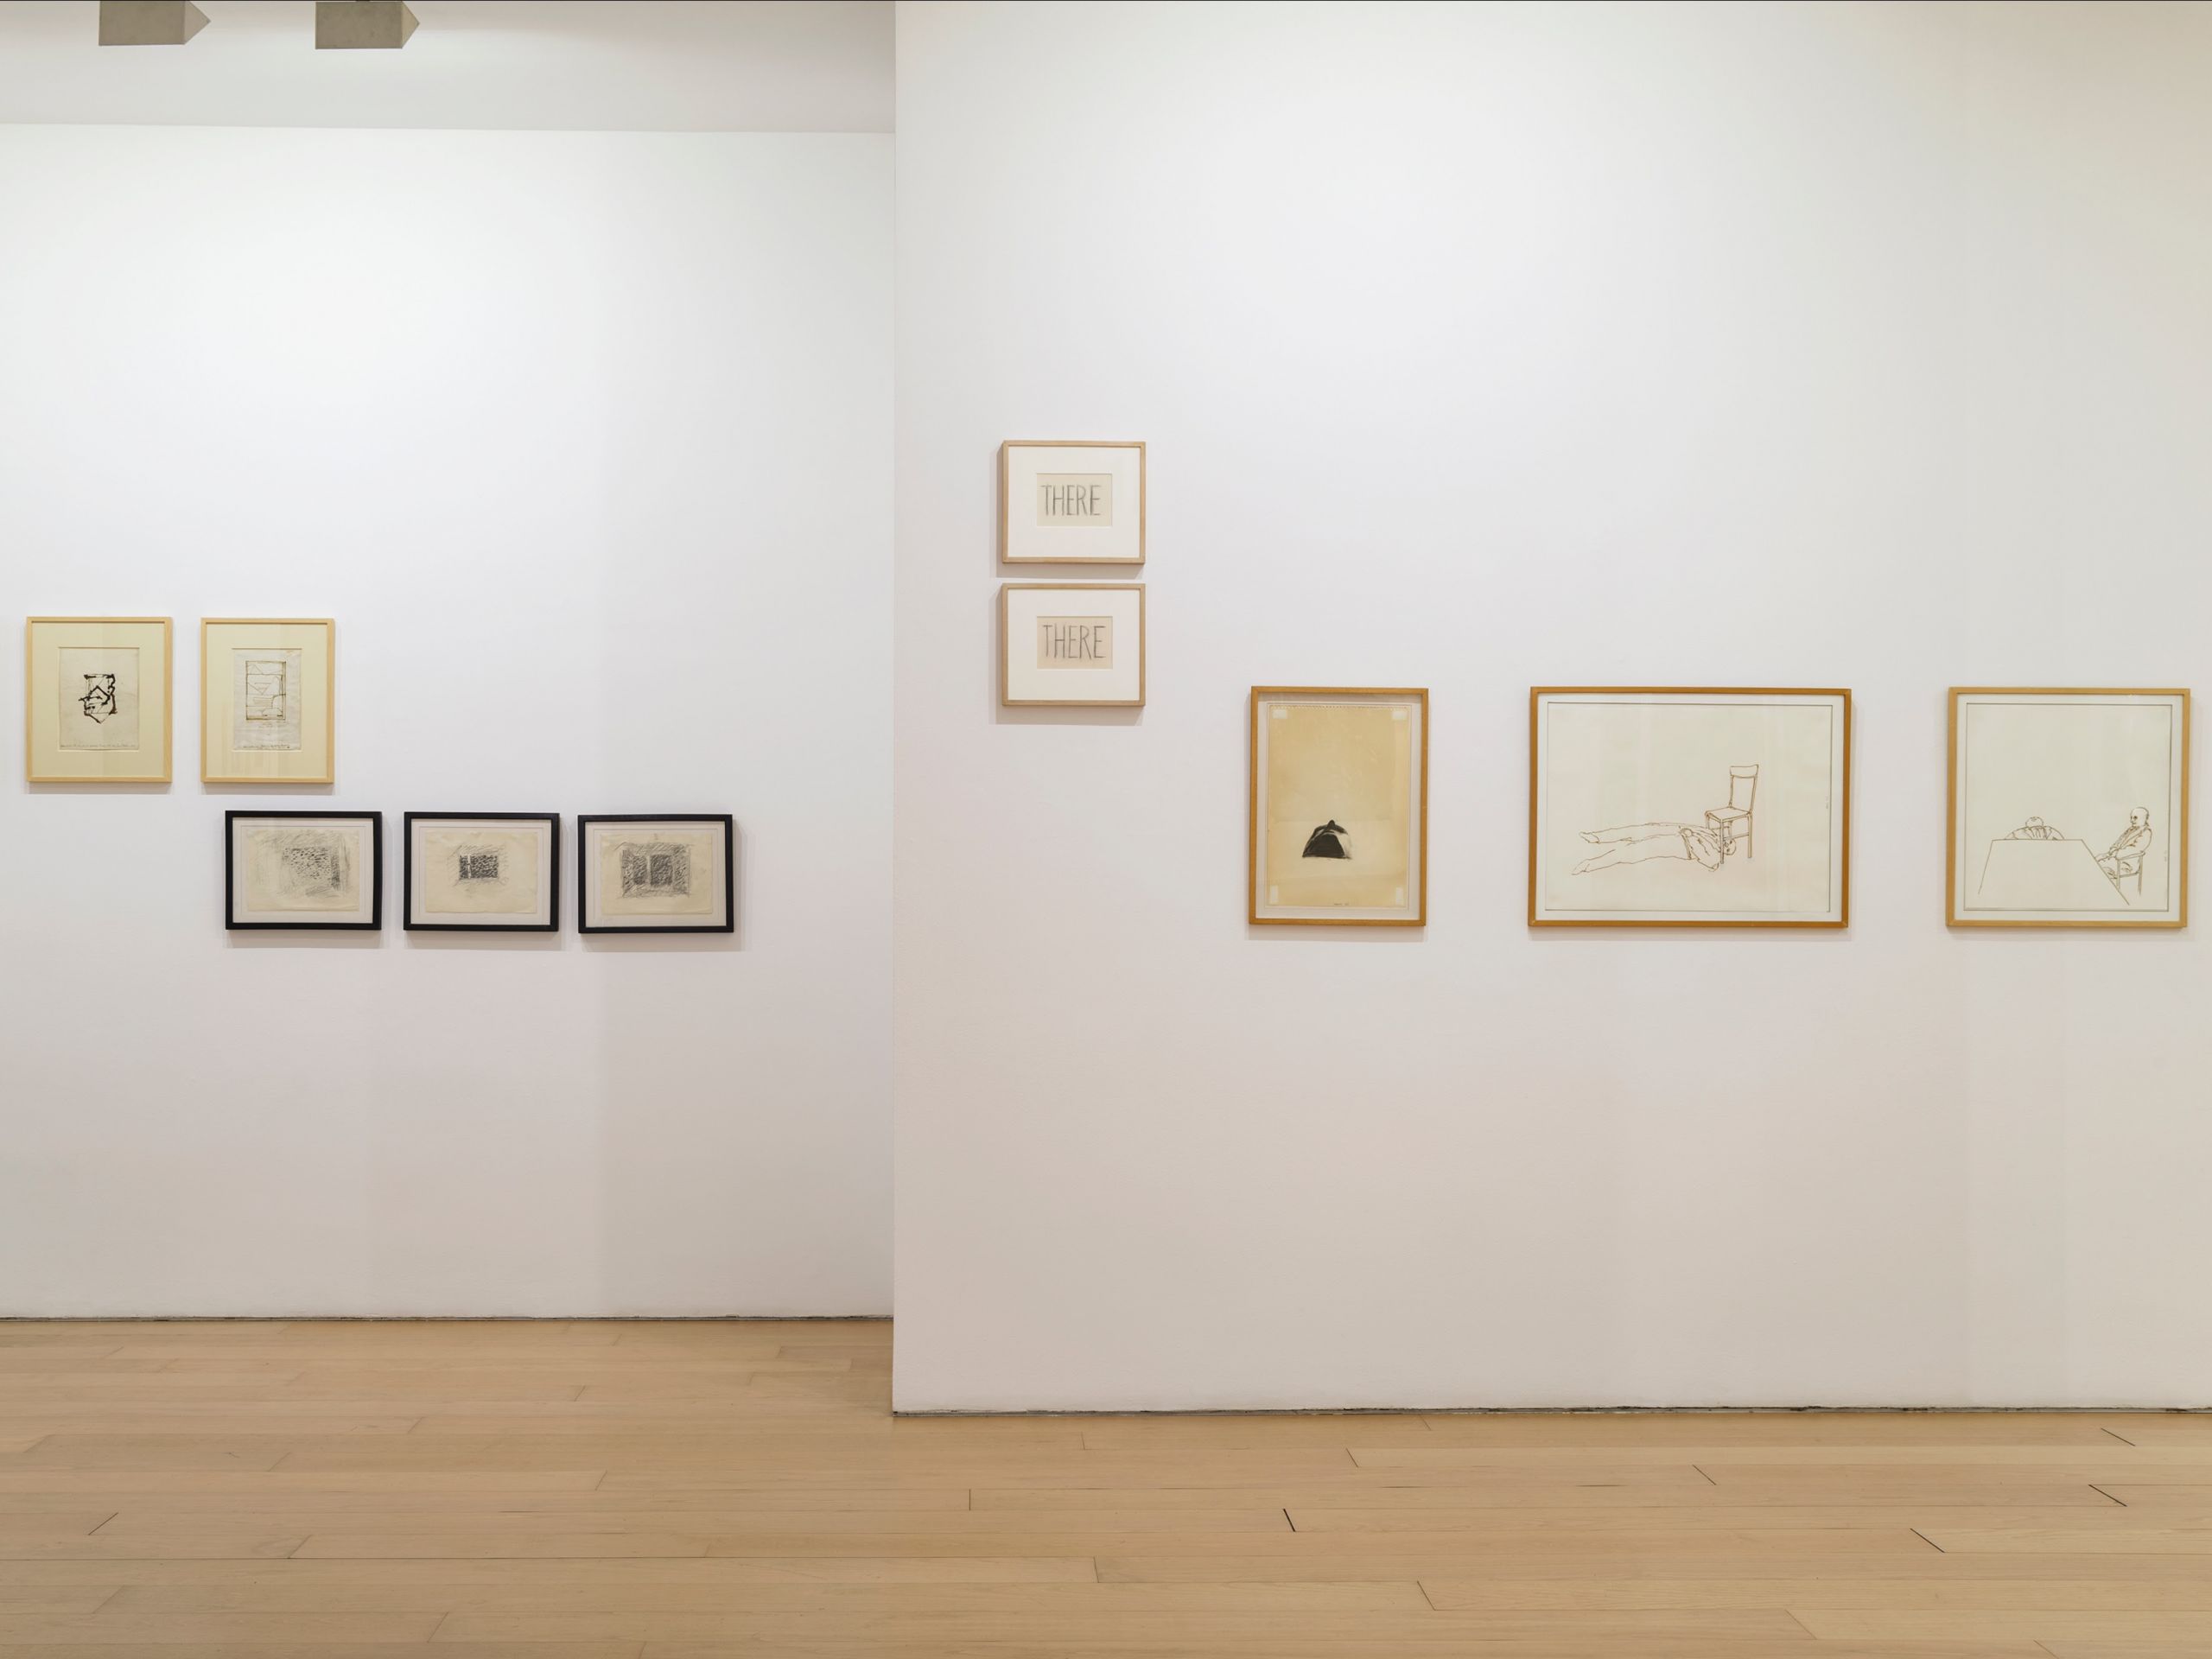 Works on paper 1972 – 2020: Ομαδική έκθεση στην γκαλερί Bernier-Eliades